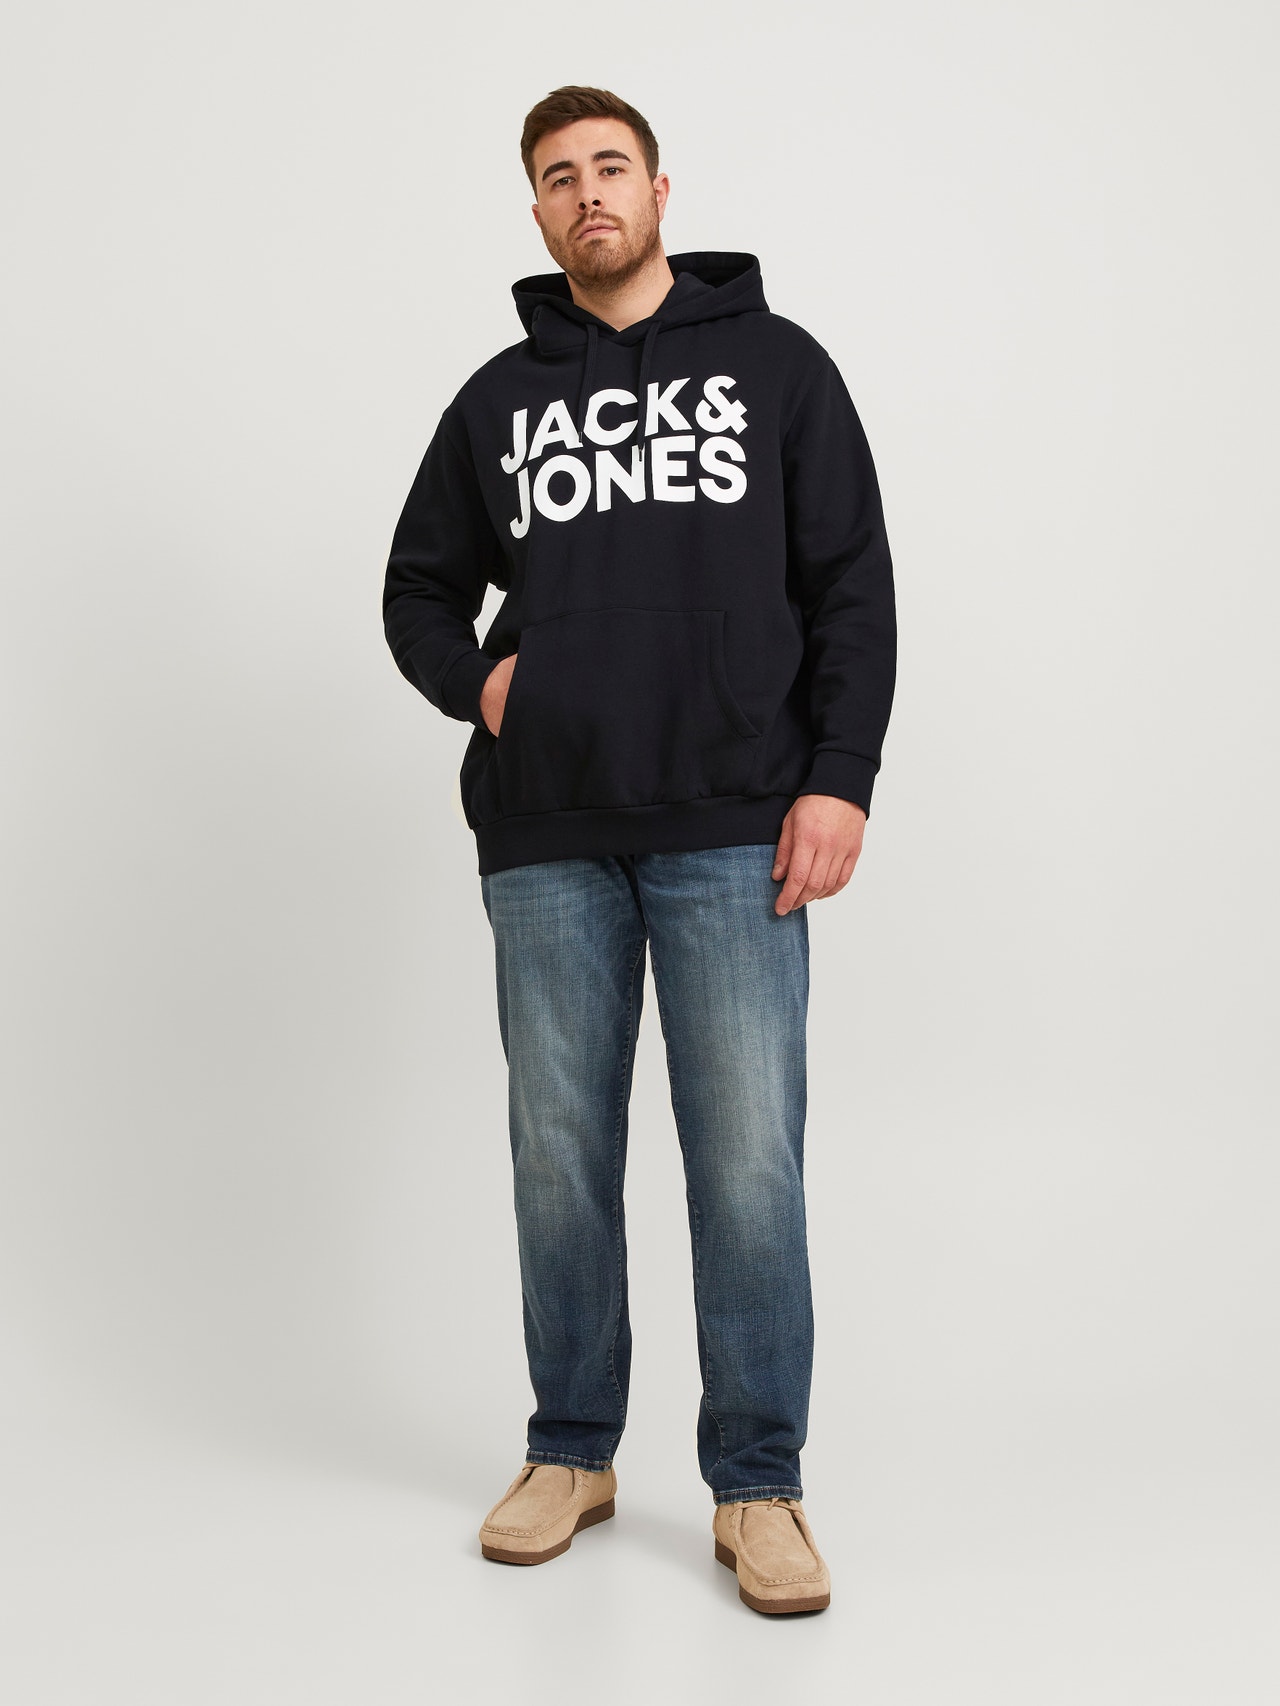 Jack & Jones Plus Size Z logo Bluza z kapturem -Black - 12163777